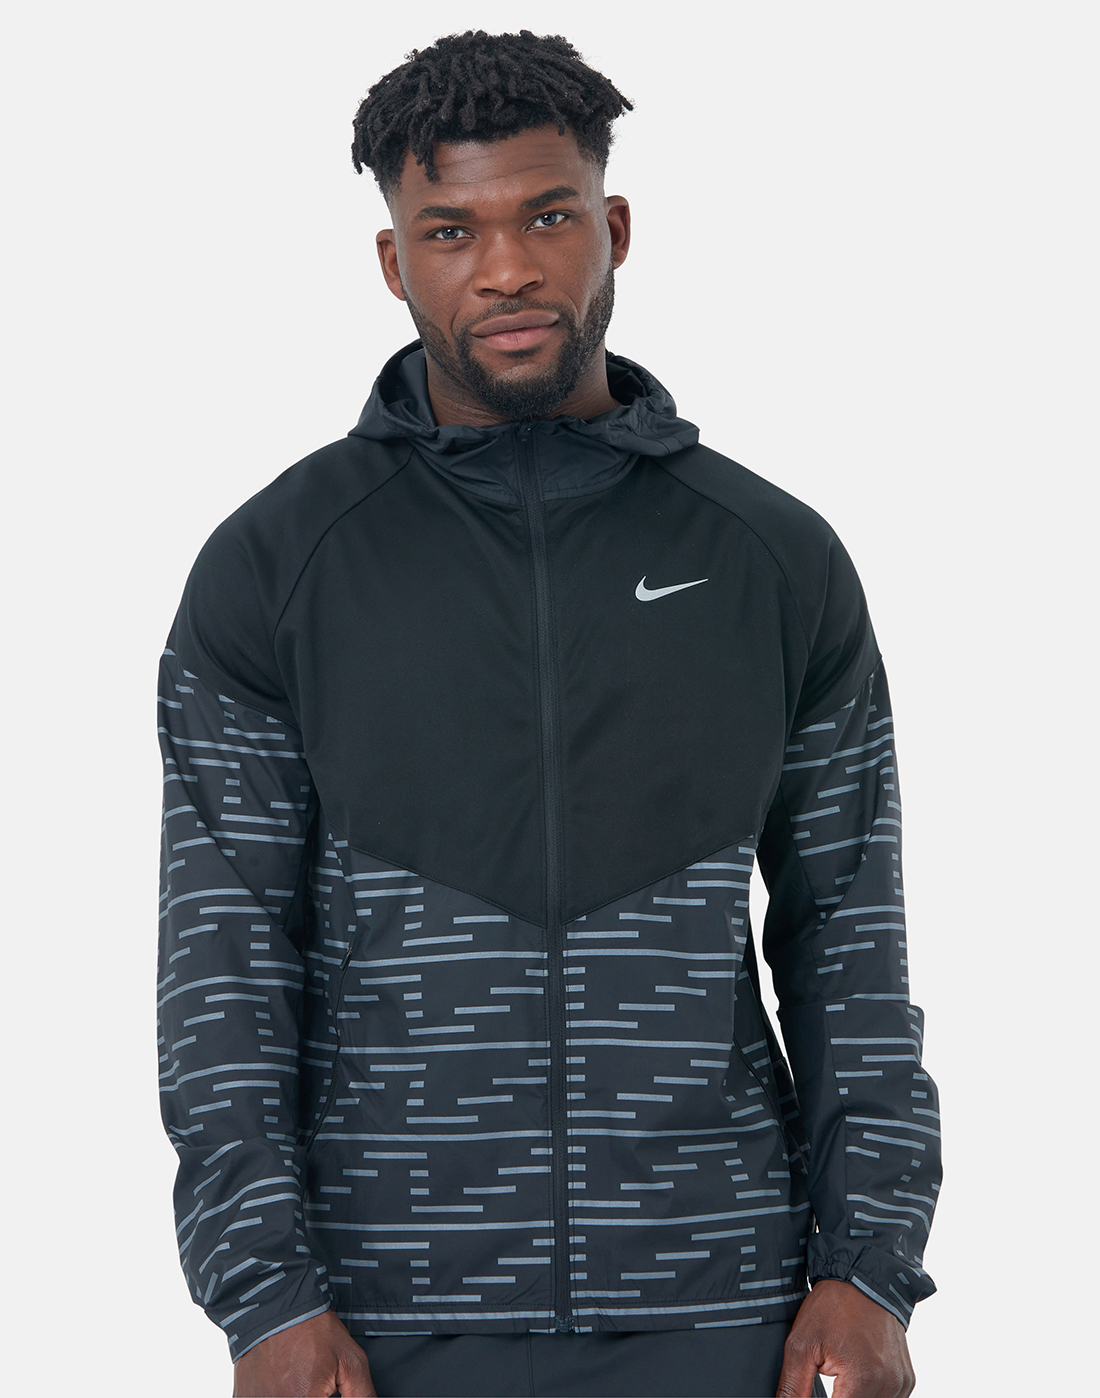 Nike Mens Run Division Flash Repel Jacket - Black